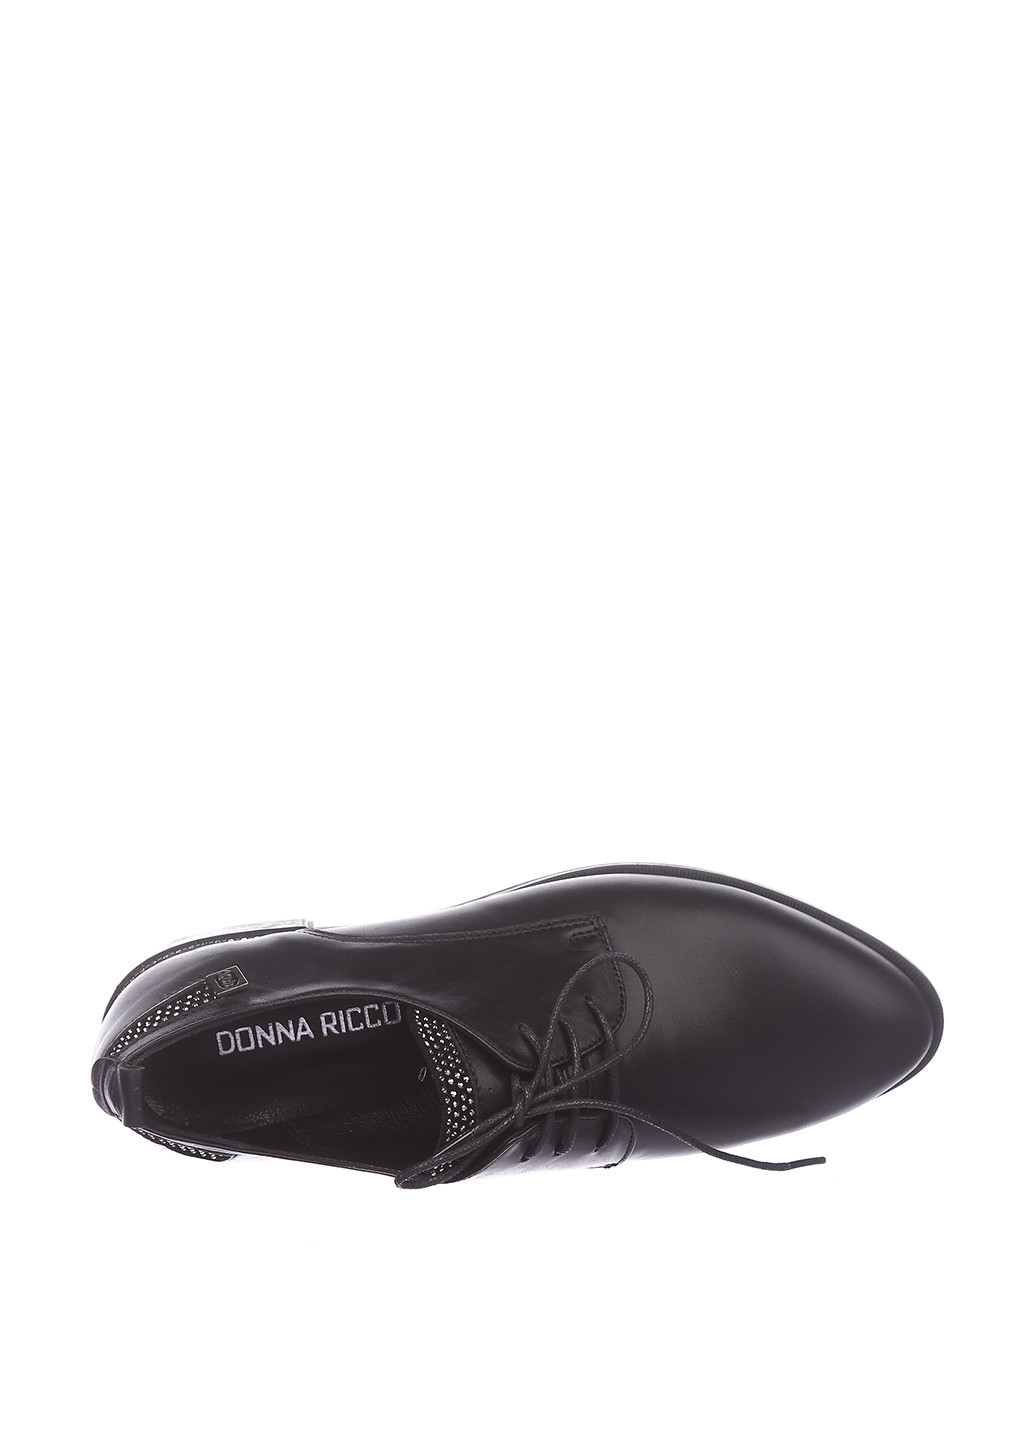 Туфли Donna Ricco на низком каблуке с аппликацией